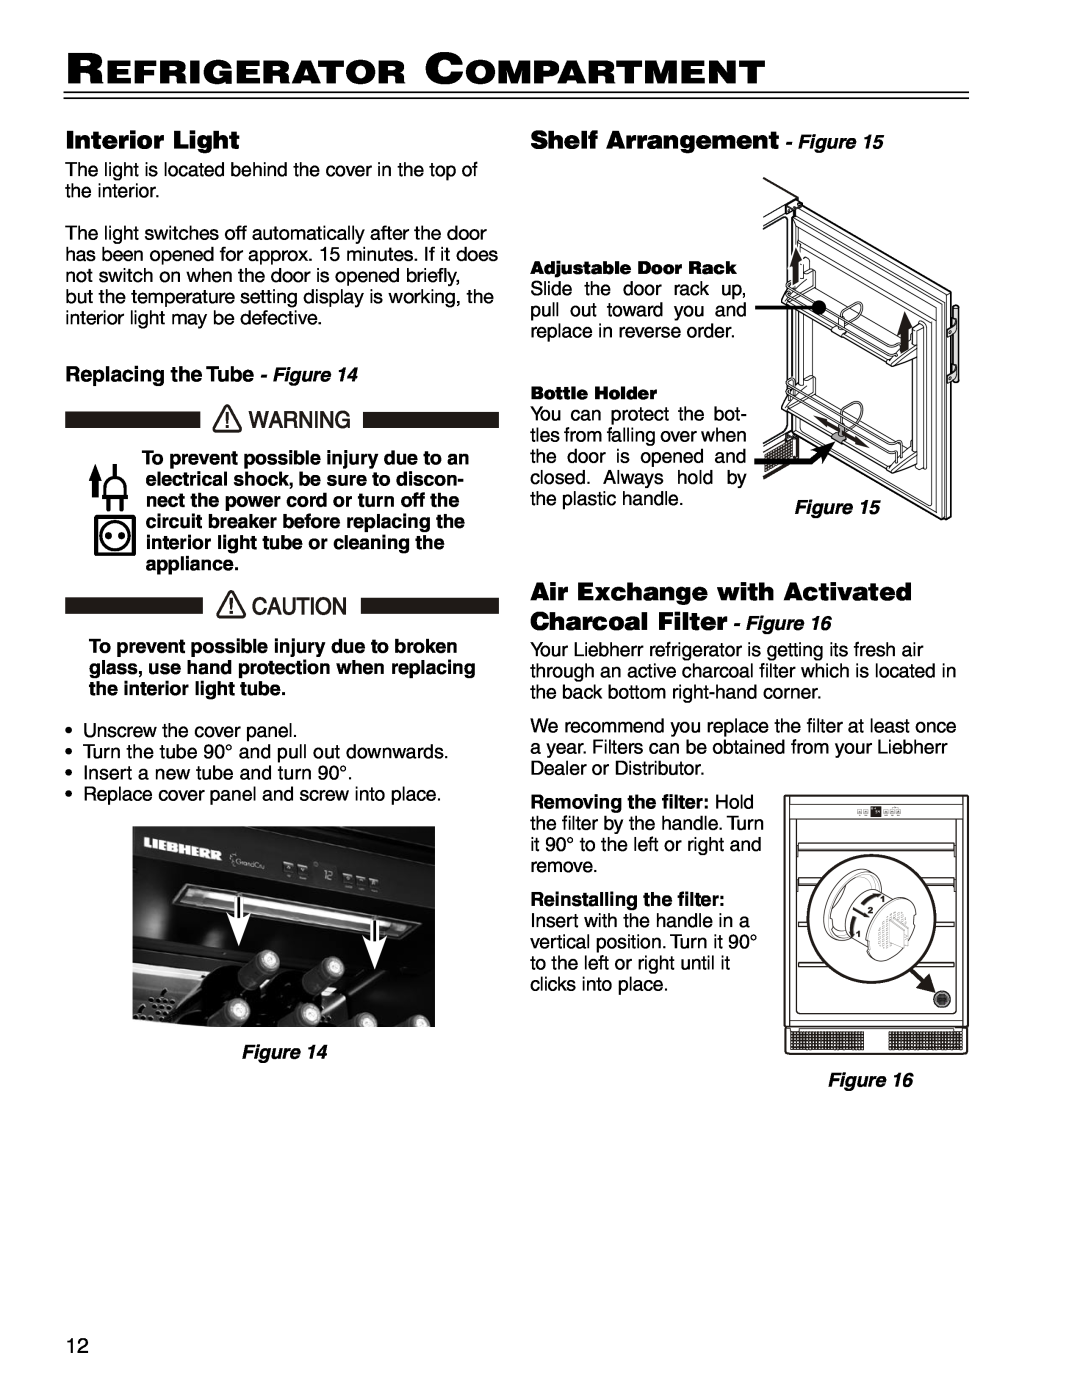 Liebherr RO500 manual Refrigerator Compartment, Interior Light, Shelf Arrangement - Figure, Replacing the Tube - Figure 